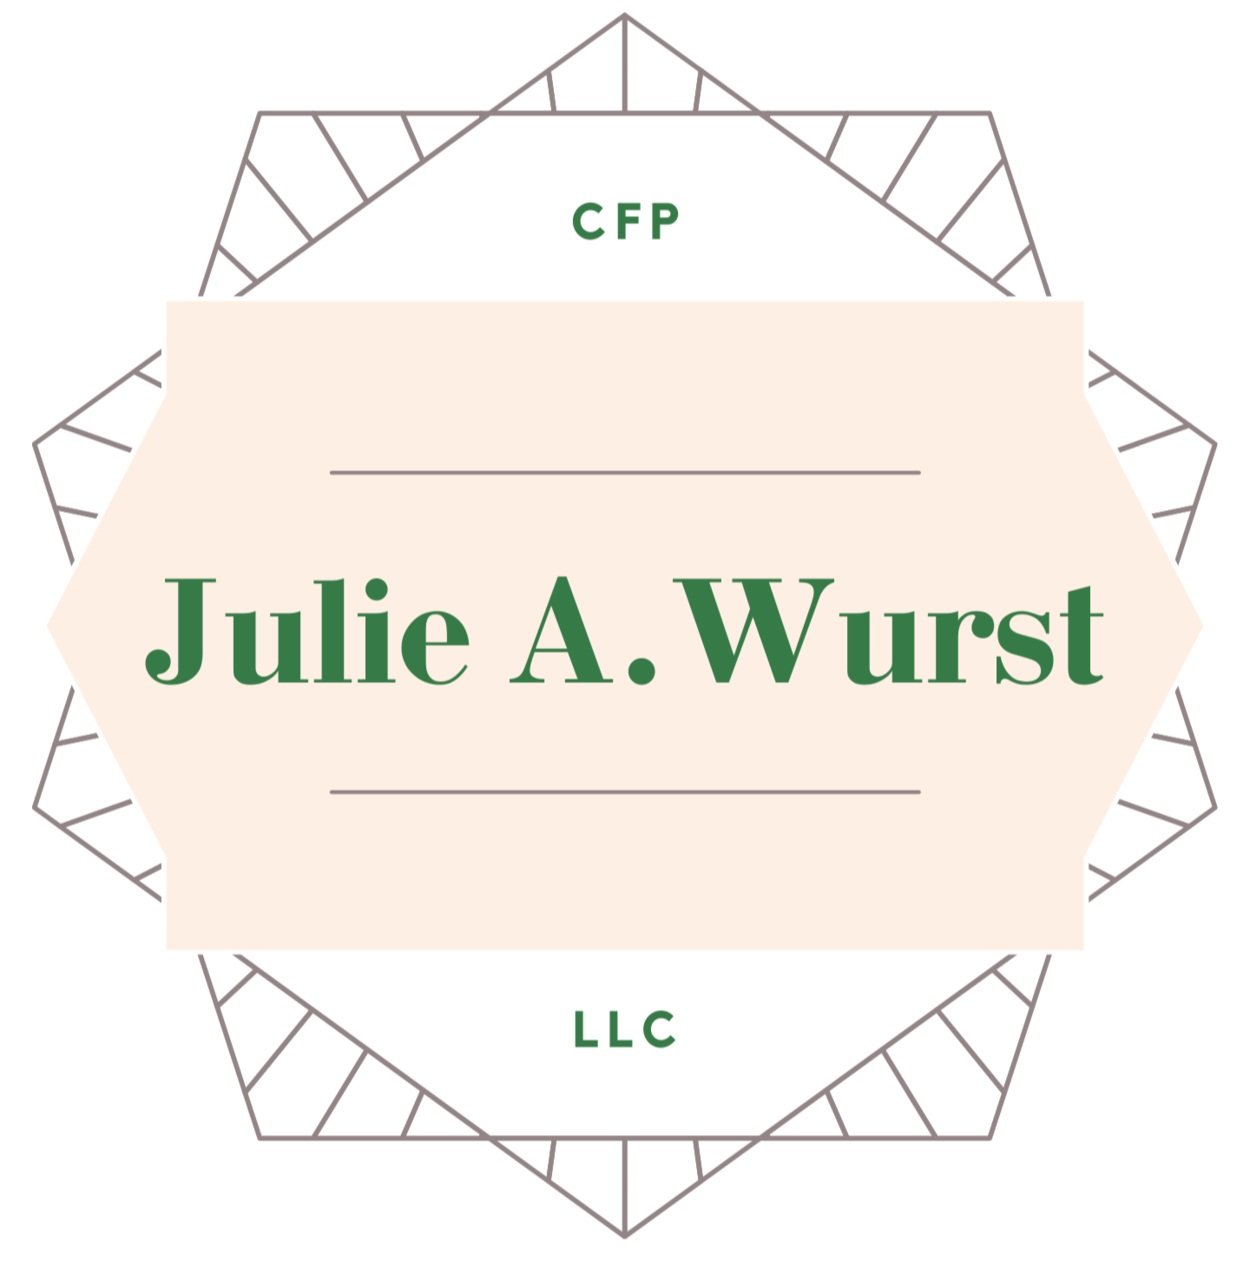 Julie A. Wurst